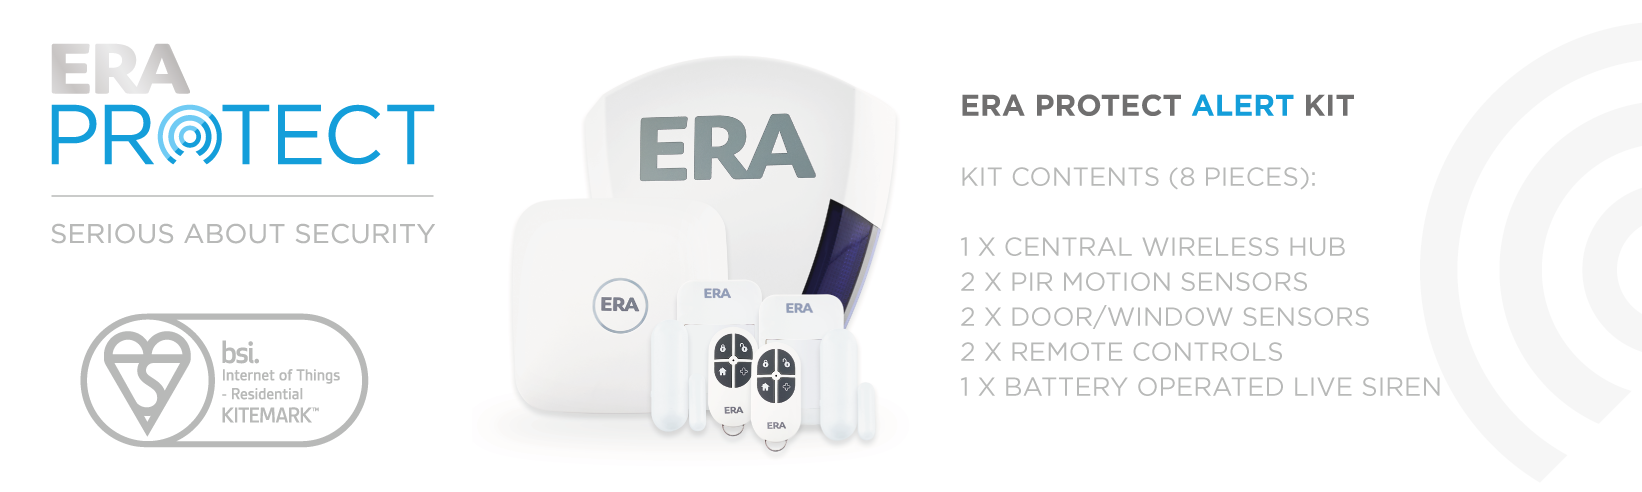 EE-ERA-Protect-Kits-1640x492-Alert.png